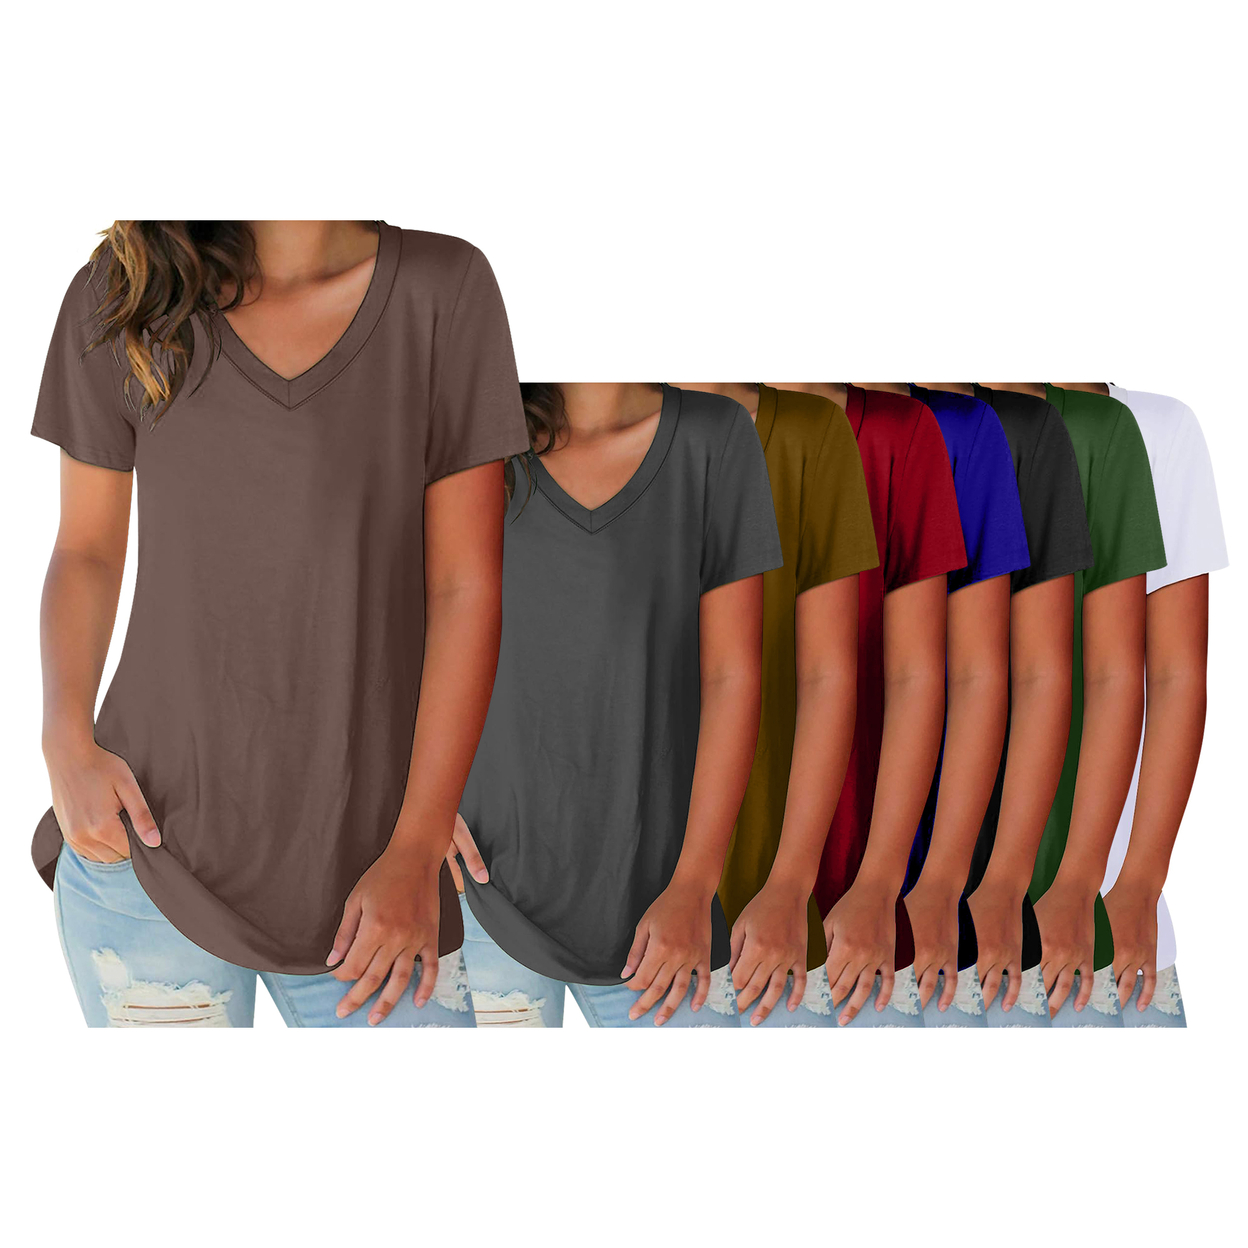 5-Pack: Women's Ultra Soft Smooth Cotton Blend Basic V-Neck Short Sleeve Shirts - Large